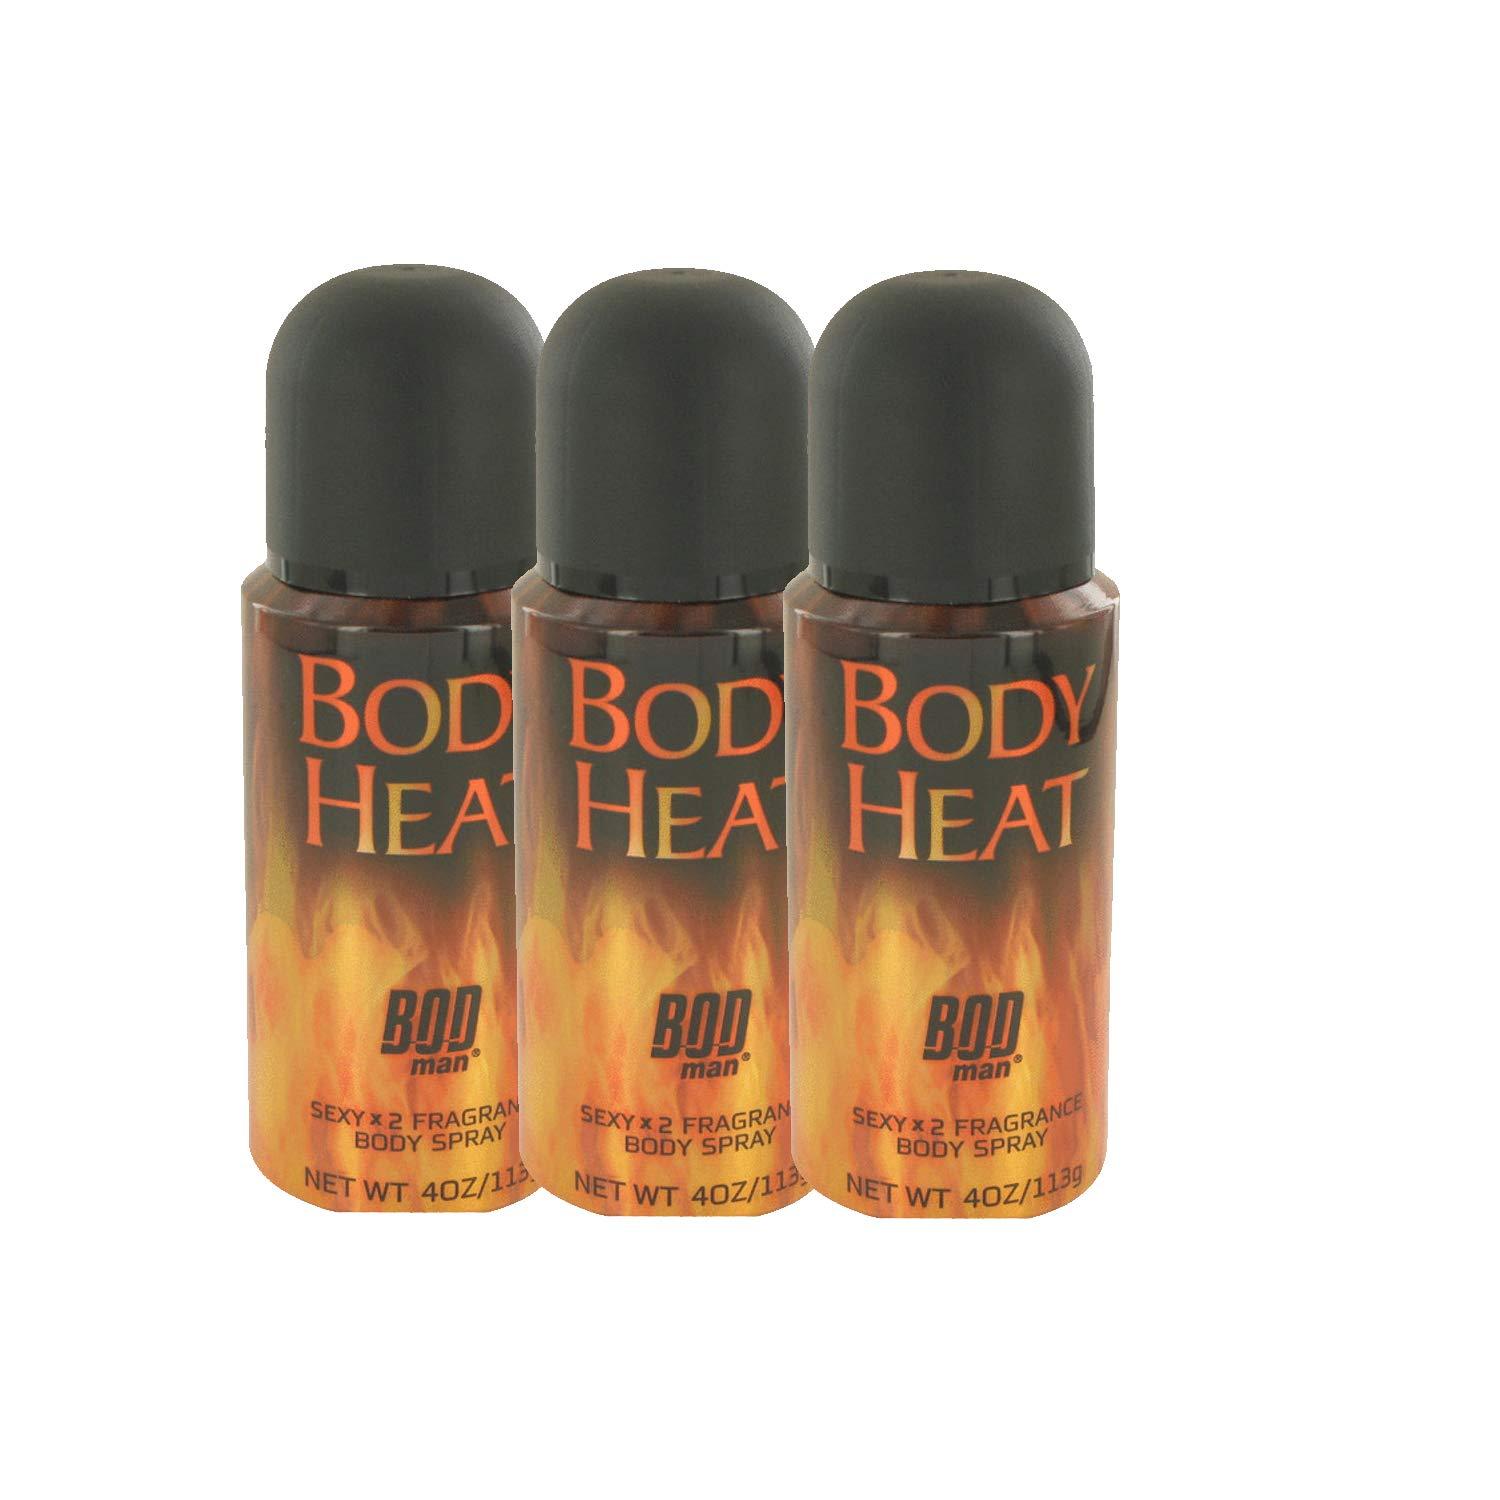 cindy peden add photo hot bod body spray